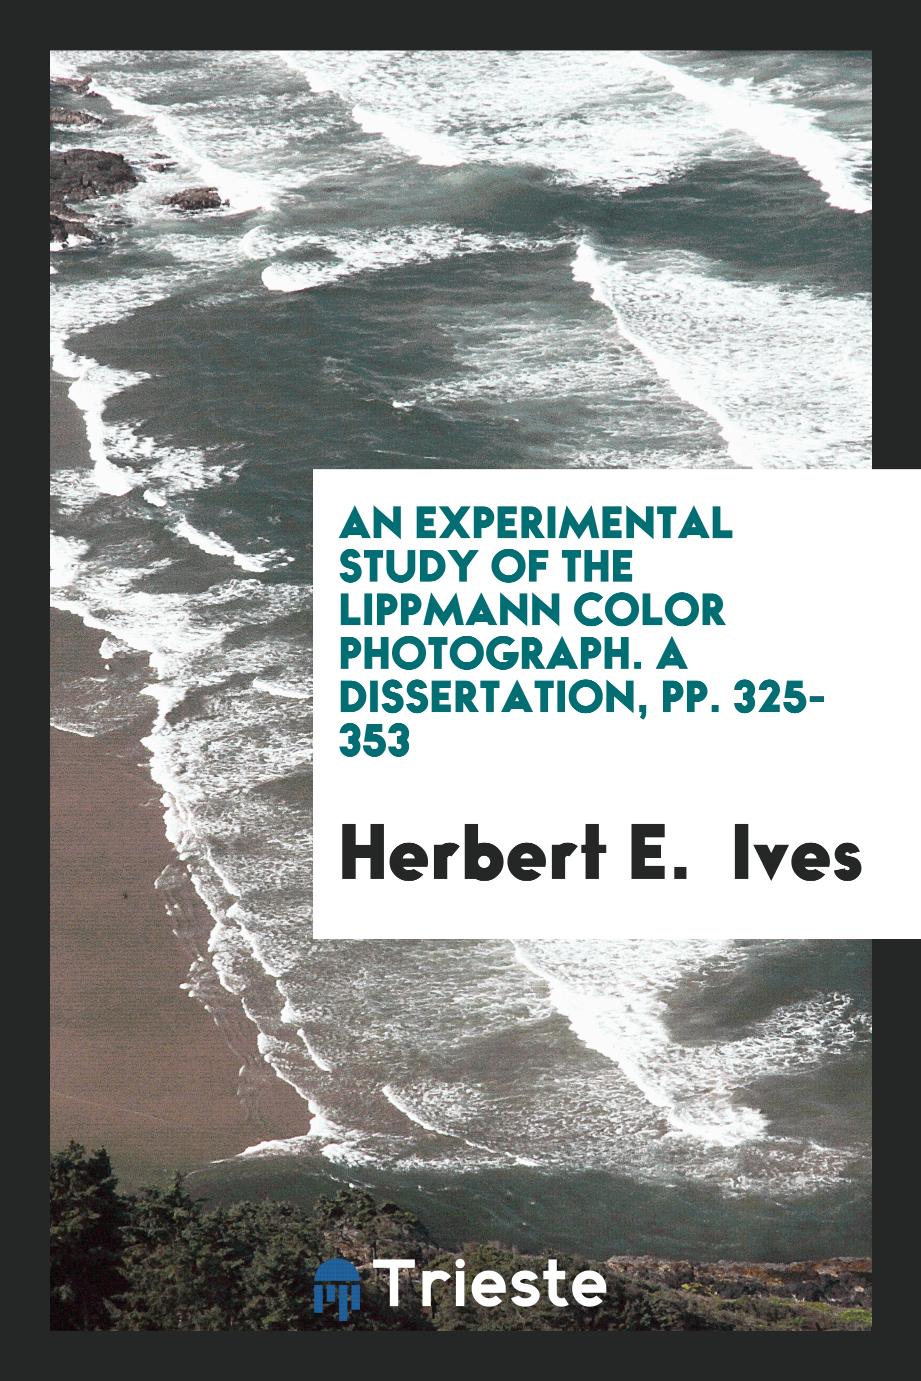 An Experimental Study of the Lippmann Color Photograph. A Dissertation, pp. 325-353